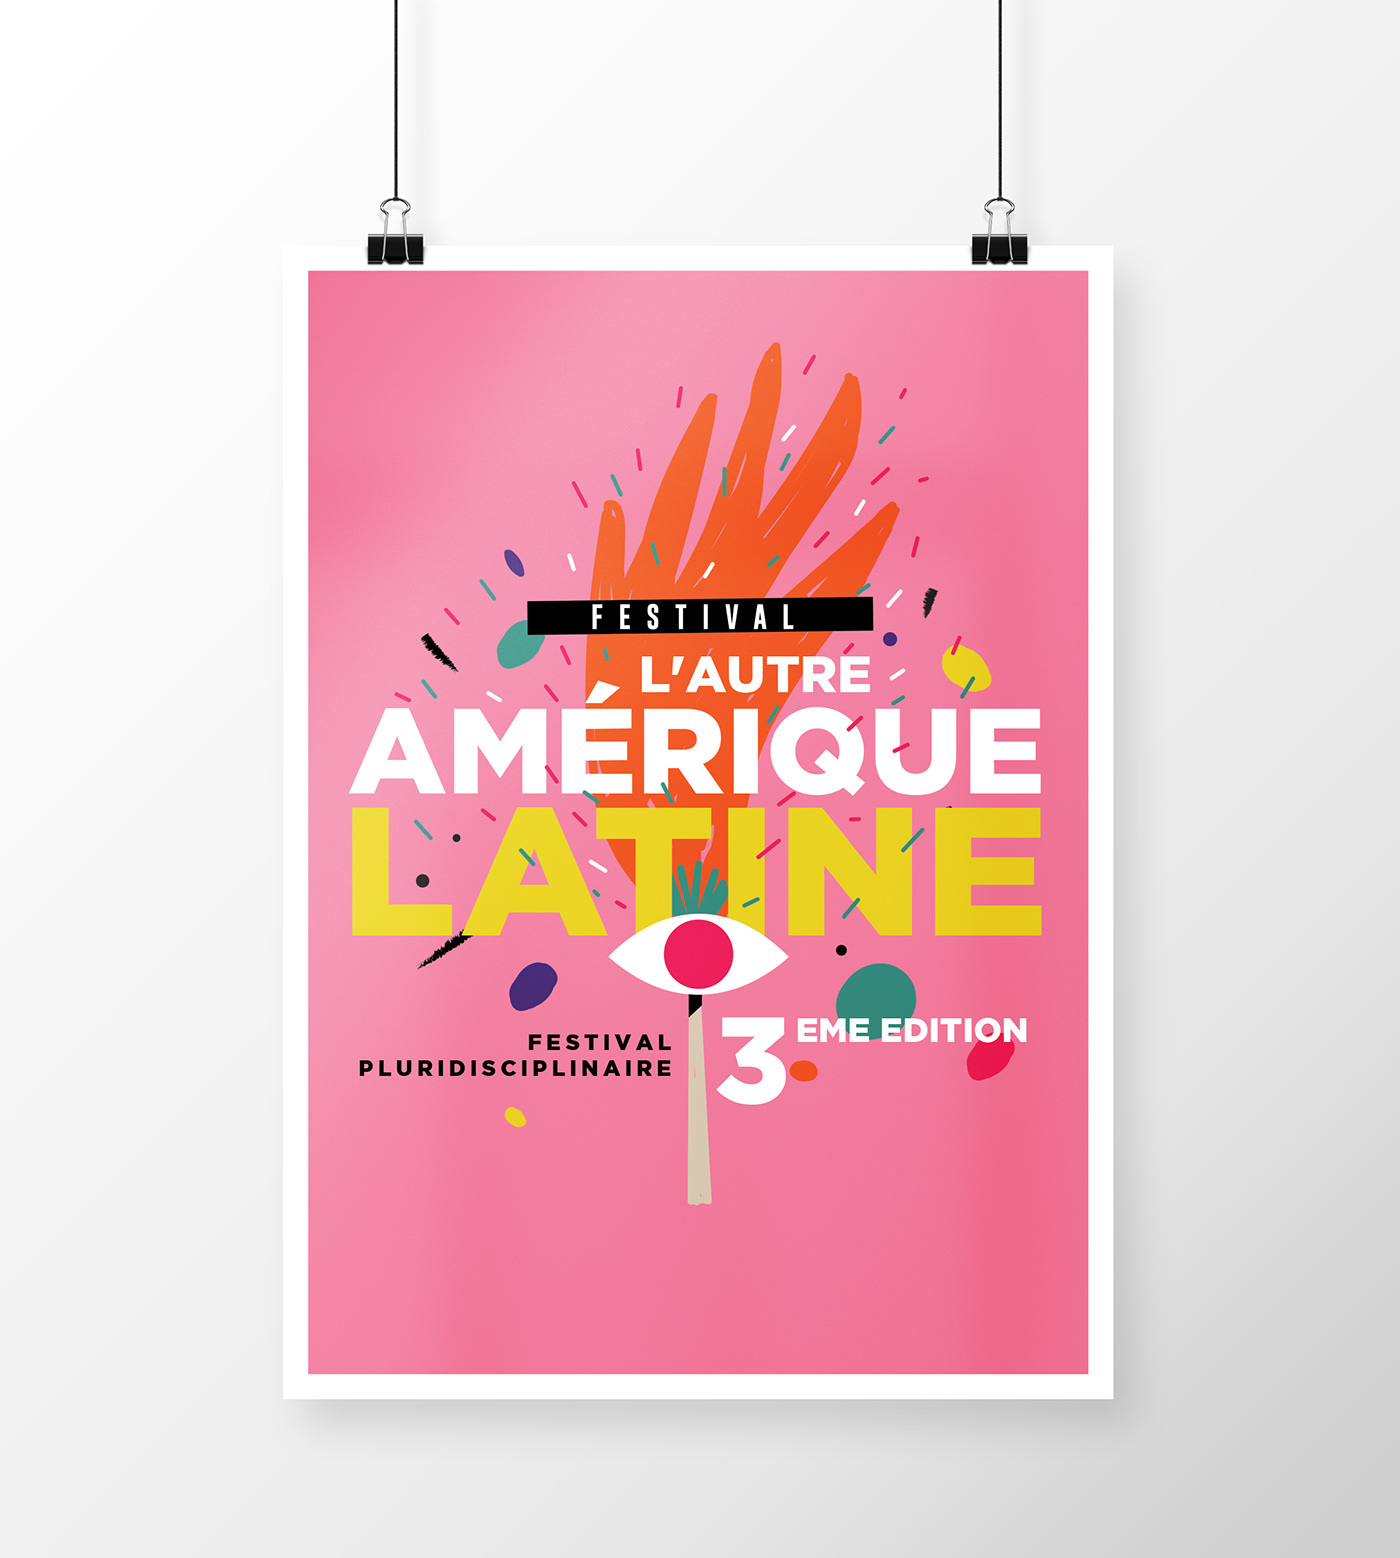 festival francia musica ilustracion pink explotion flame eye DANCE   amérique latine